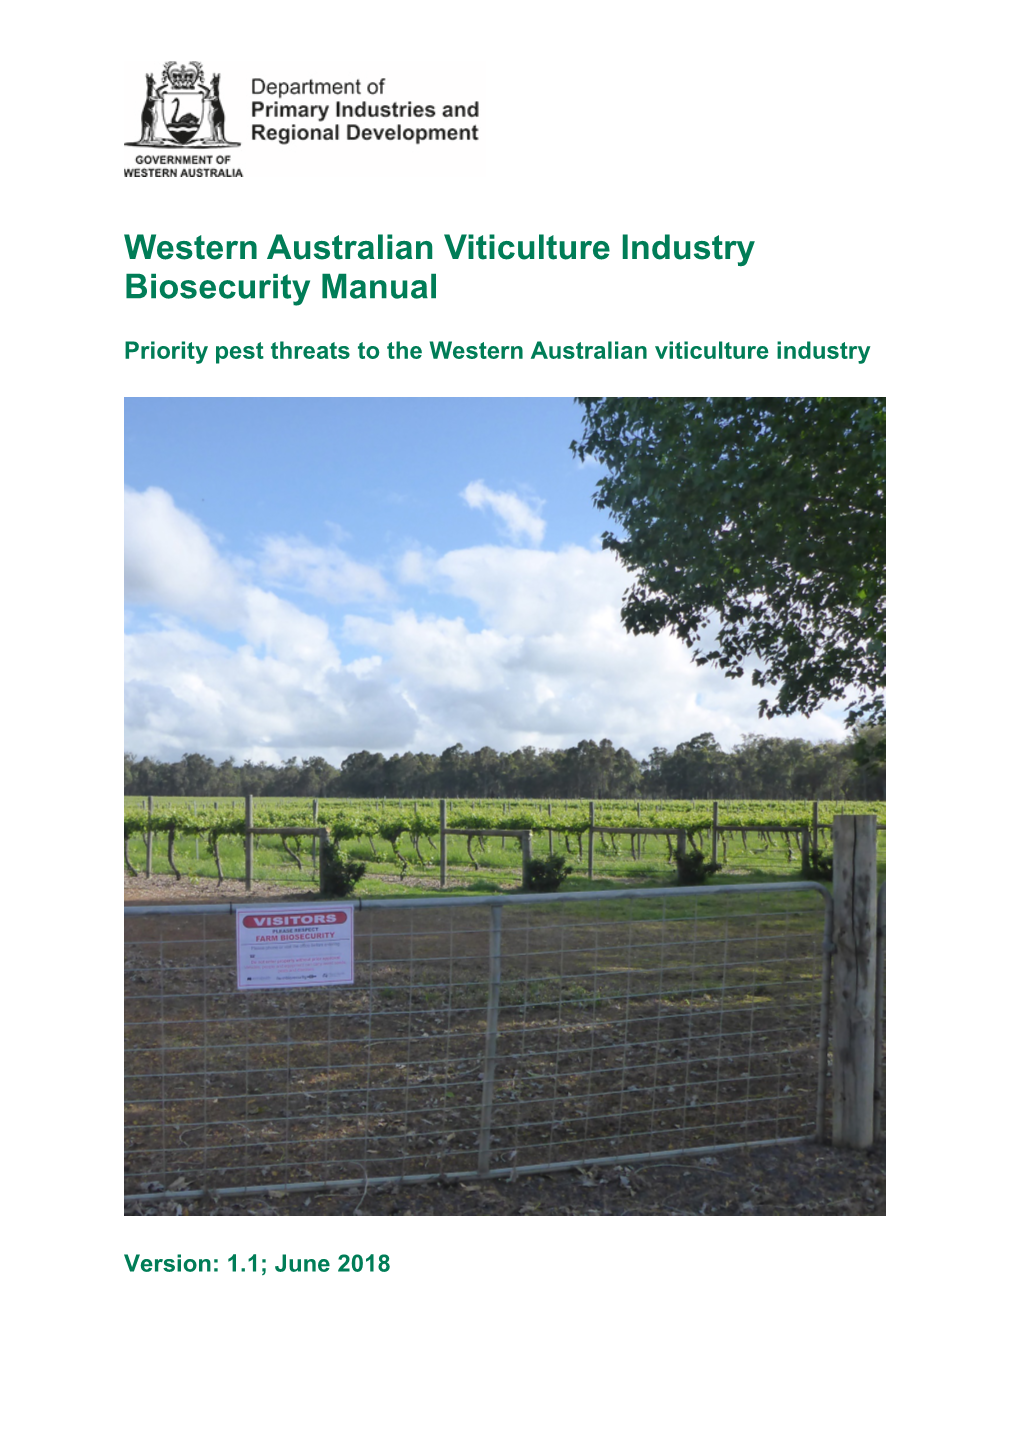 Western Australian Viticulture Industry Biosecurity Manual